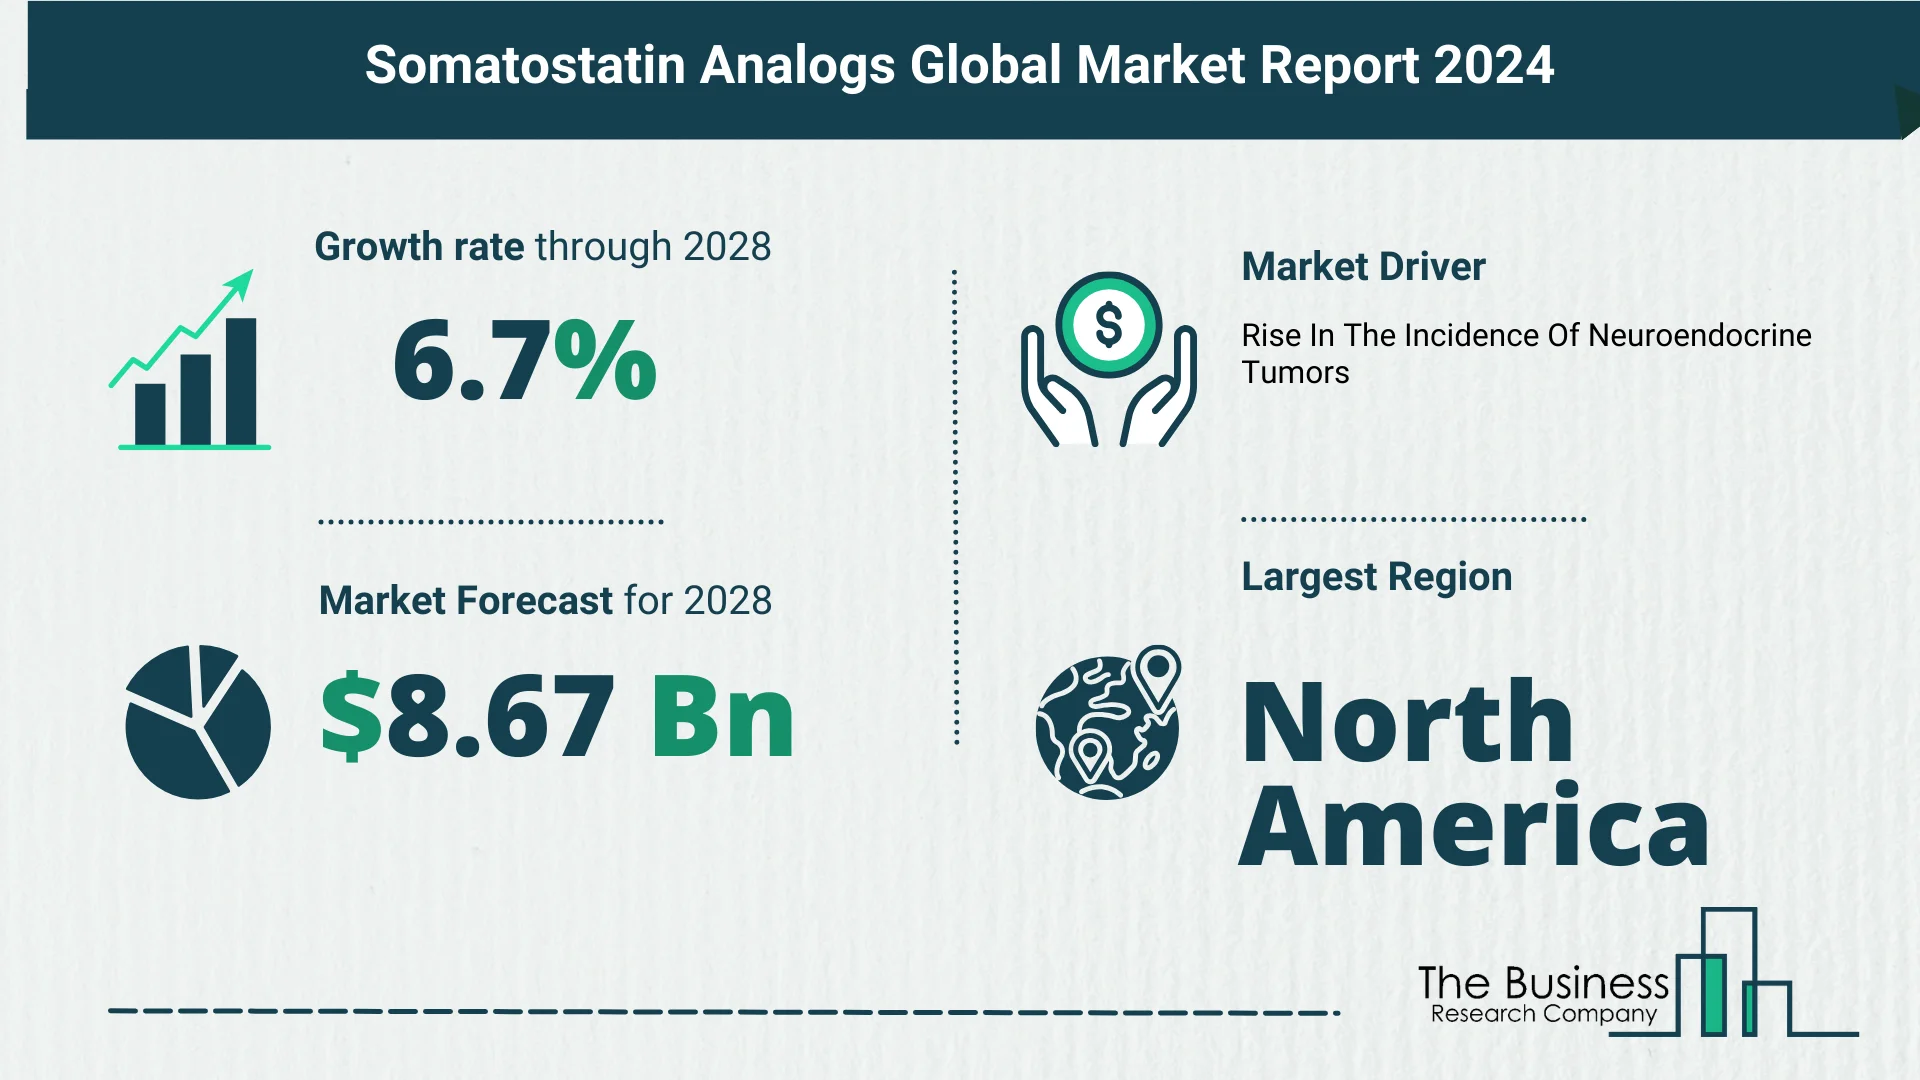 How Is The Somatostatin Analogs Market Expected To Grow Through 2024-2033